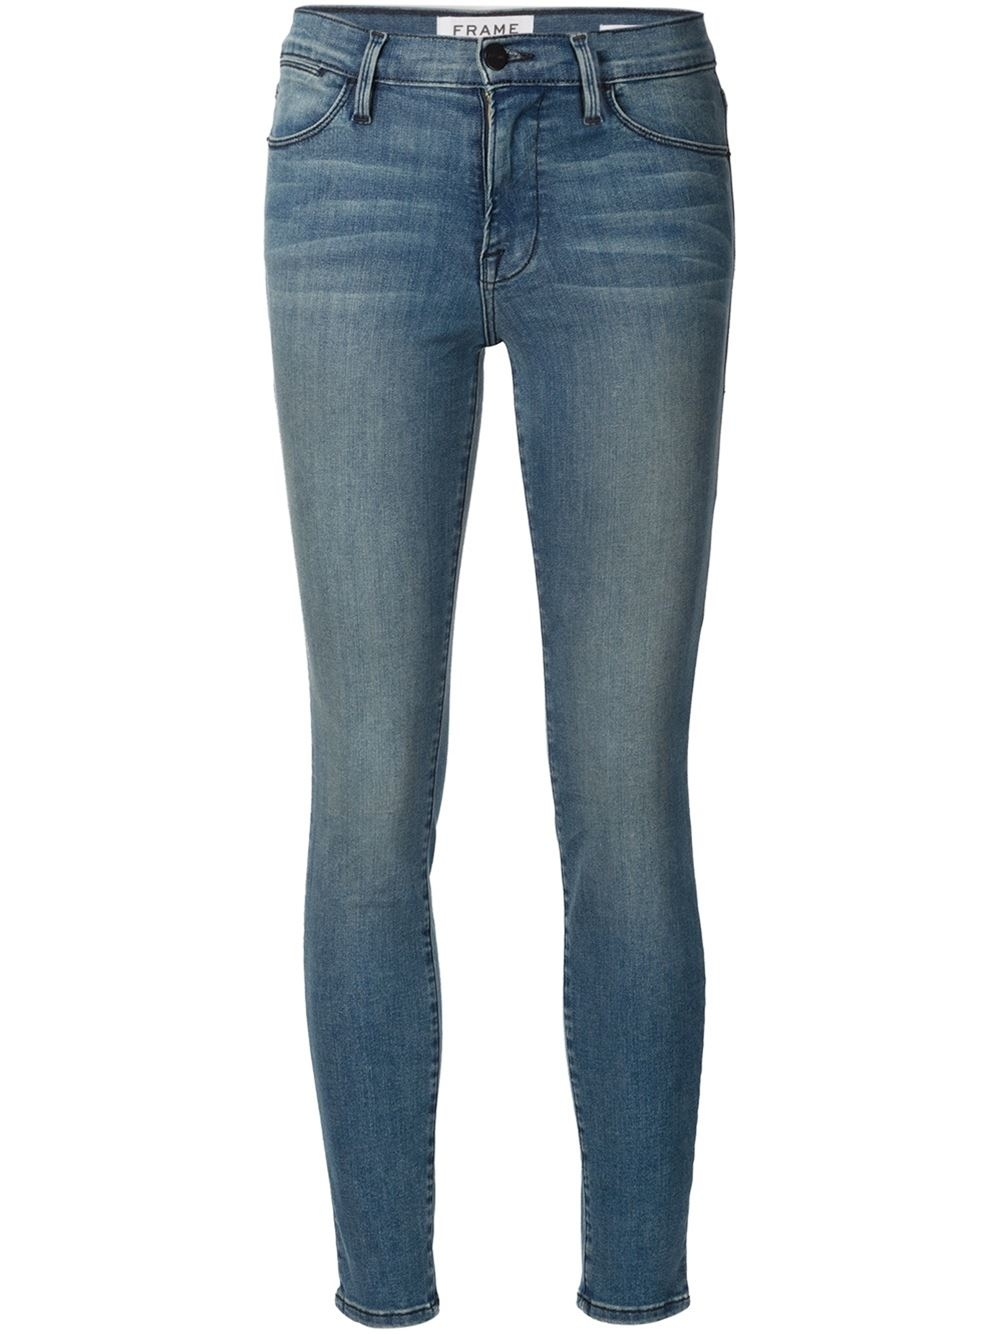 Frame denim Le High Skinny Jeans in Blue | Lyst